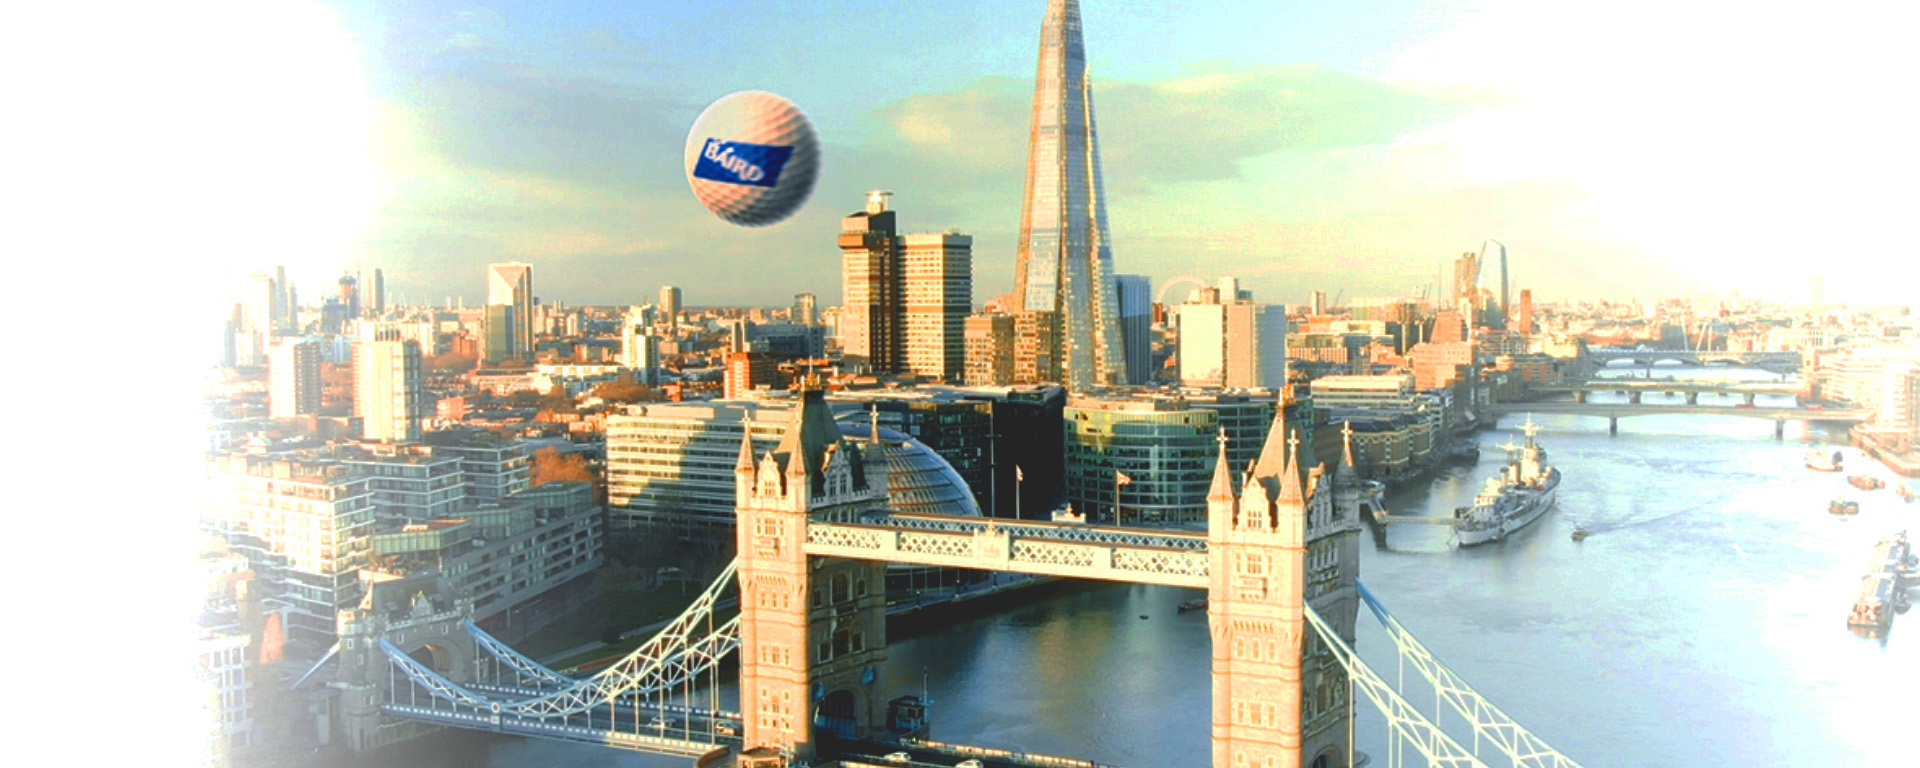 Baird golf ball flyer over bridge in London.